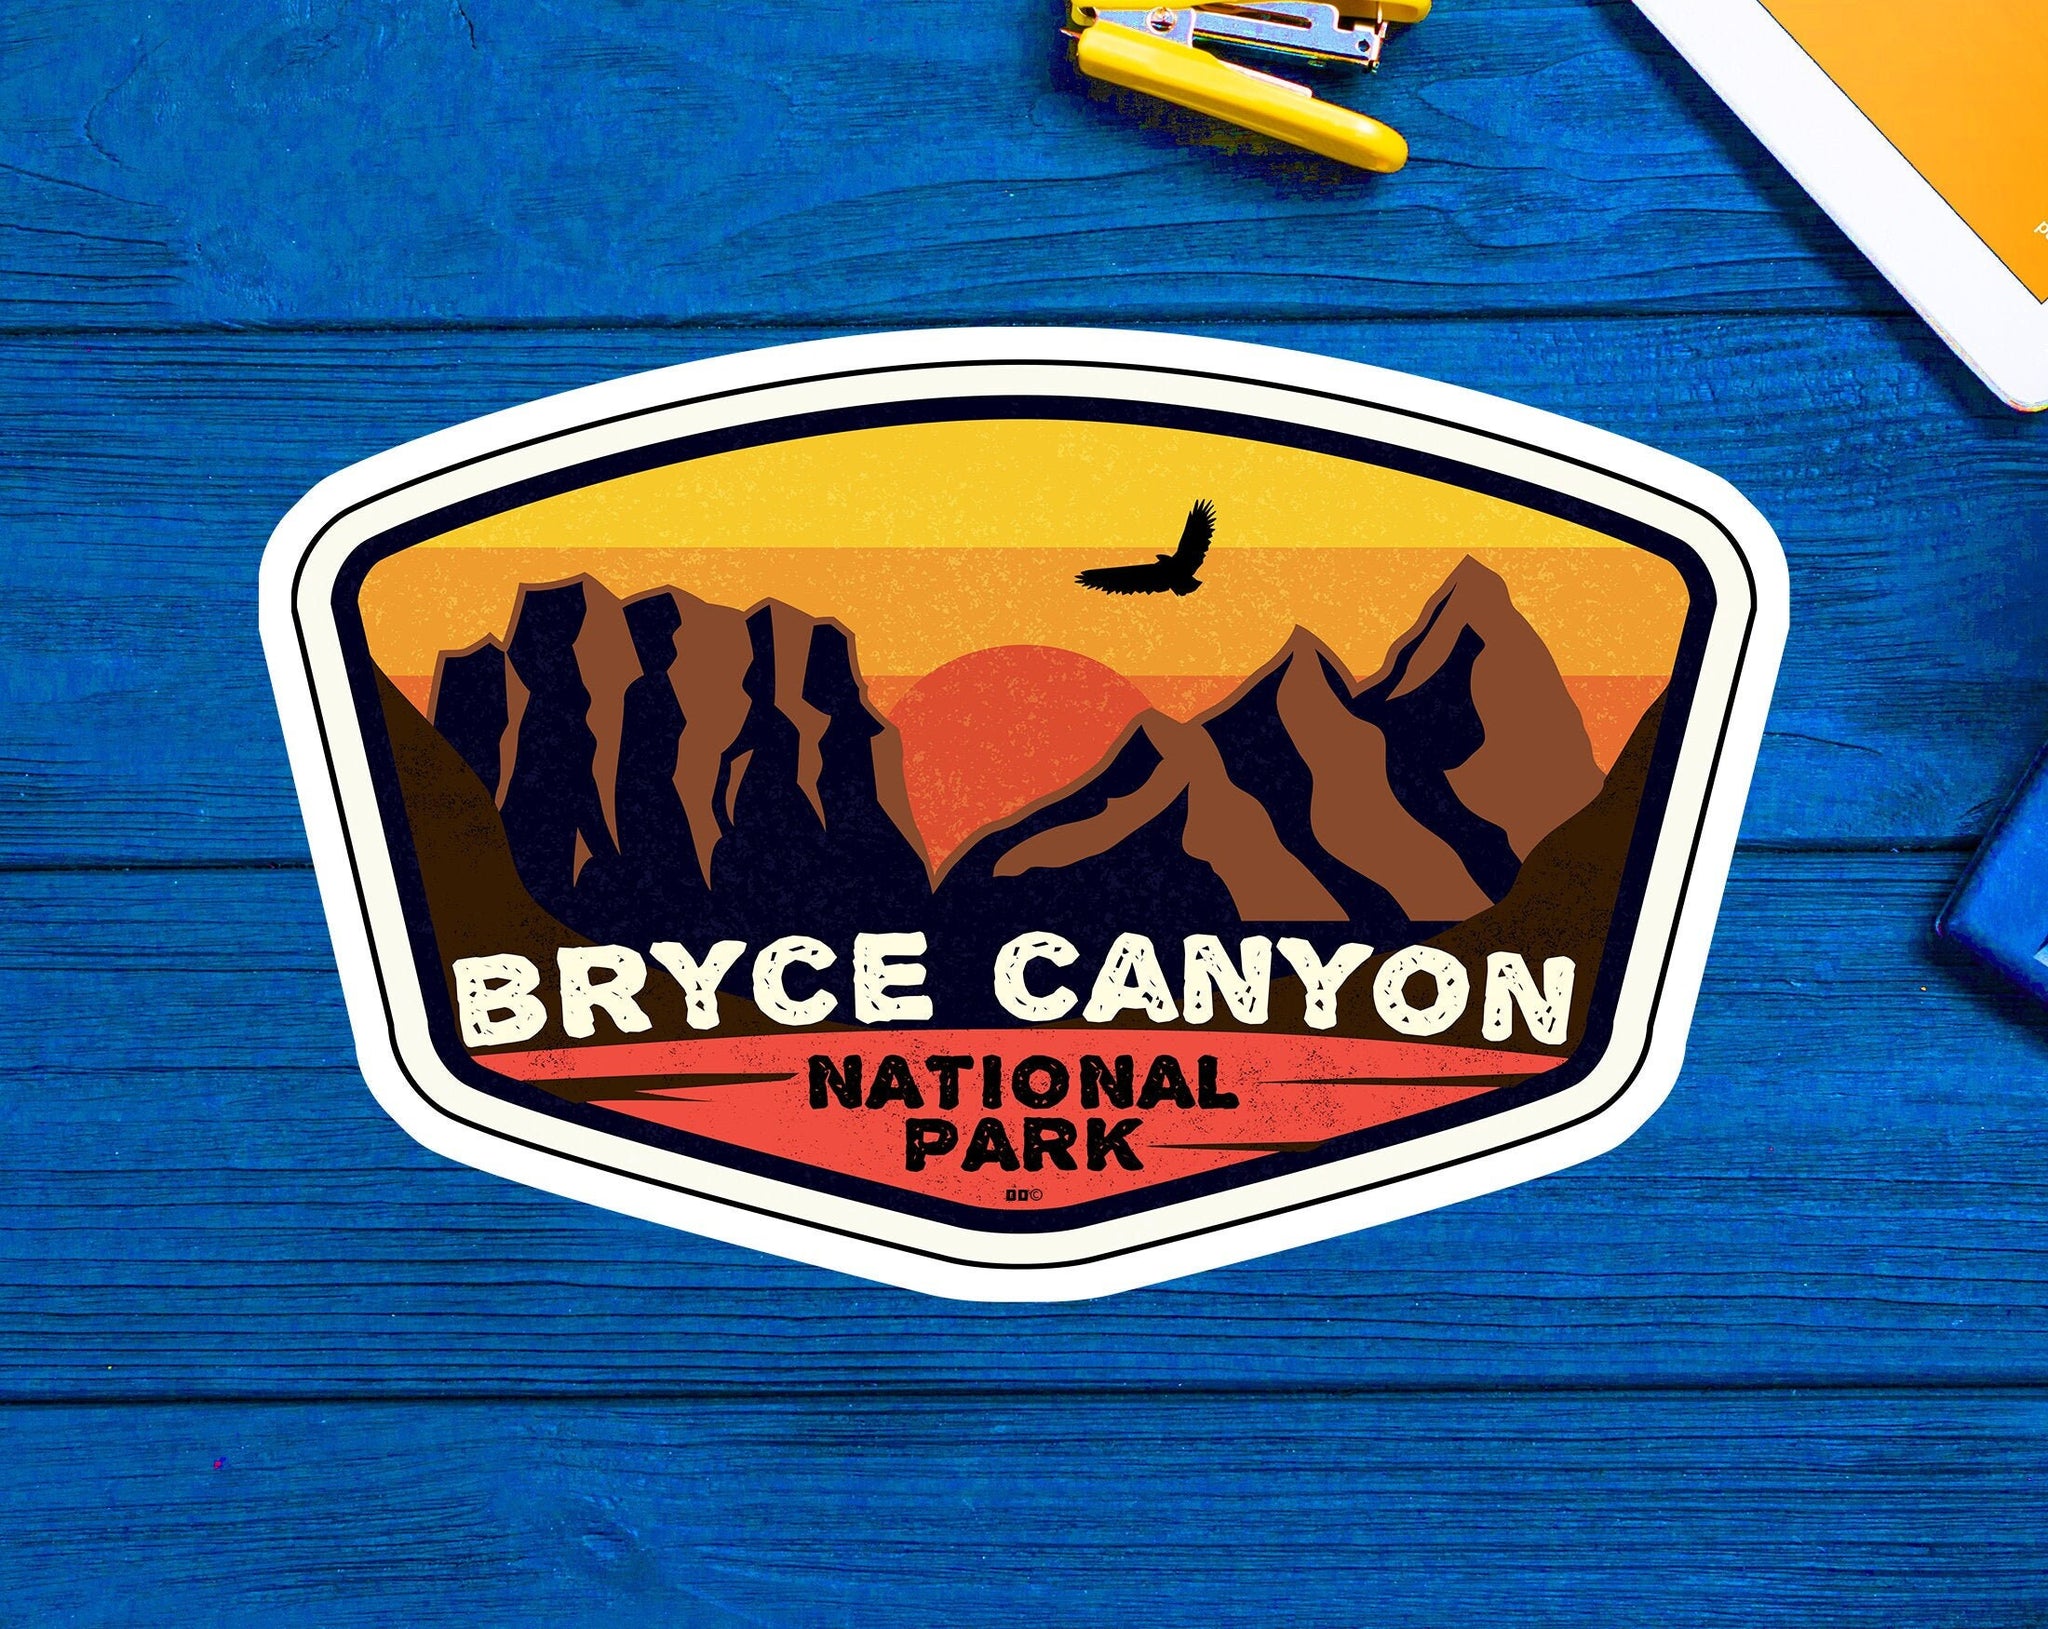 Bryce Canyon National Park Utah Sticker 3.75" x 2.4" Vinyl Decal